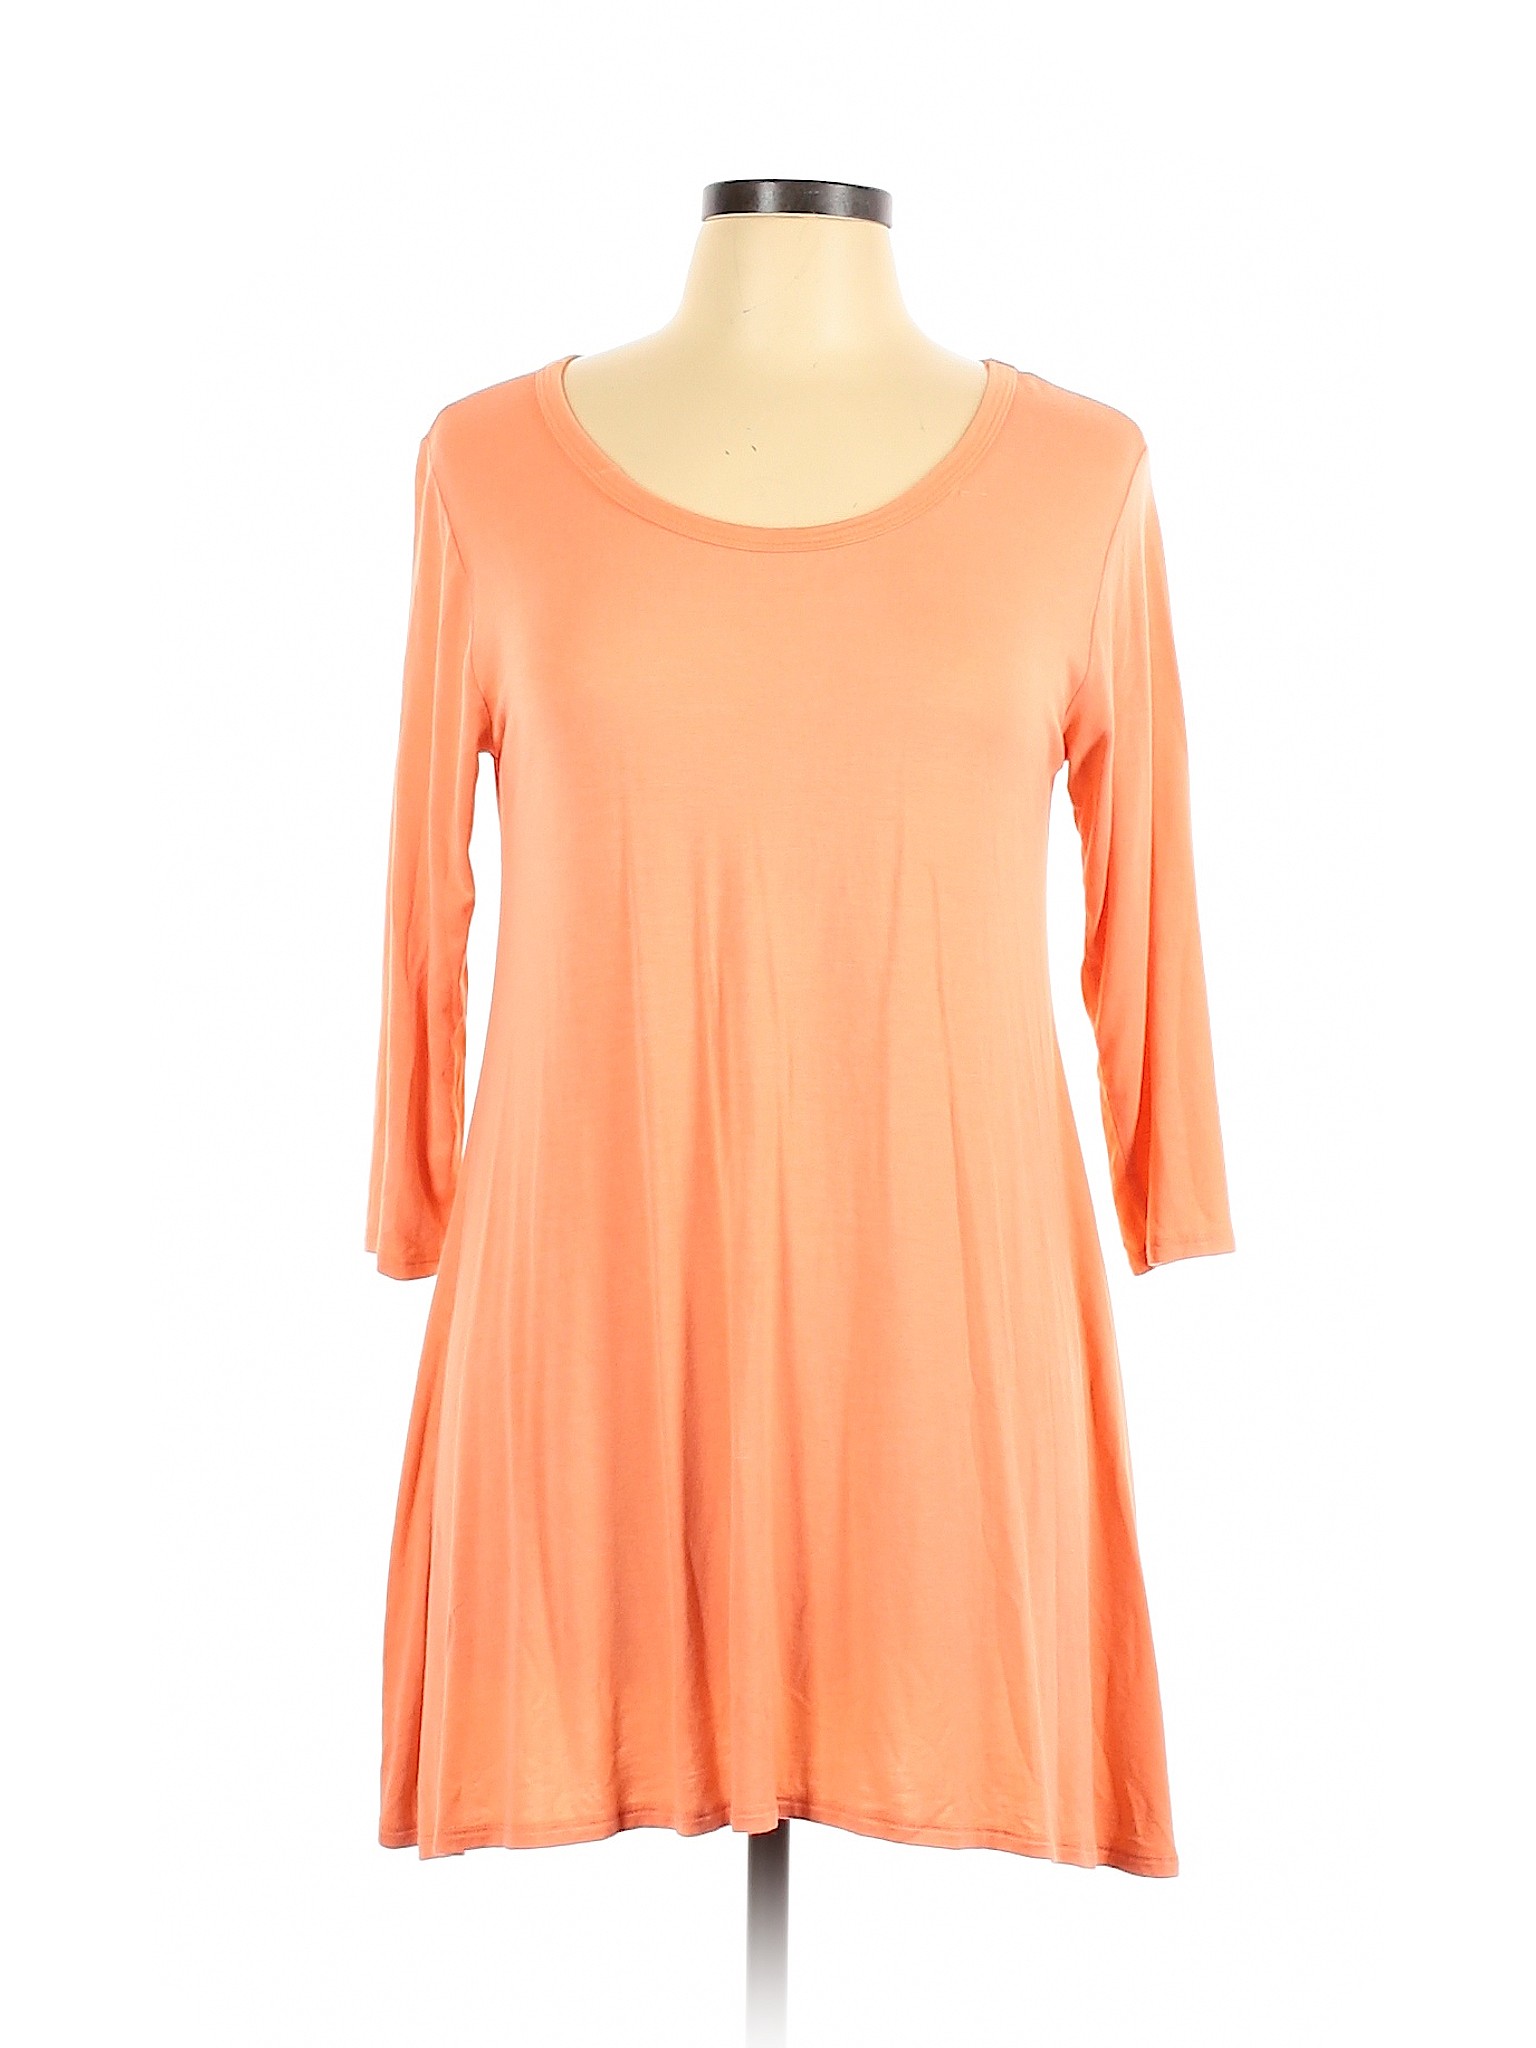 Goo Yoo Women Orange 3/4 Sleeve Top L | eBay